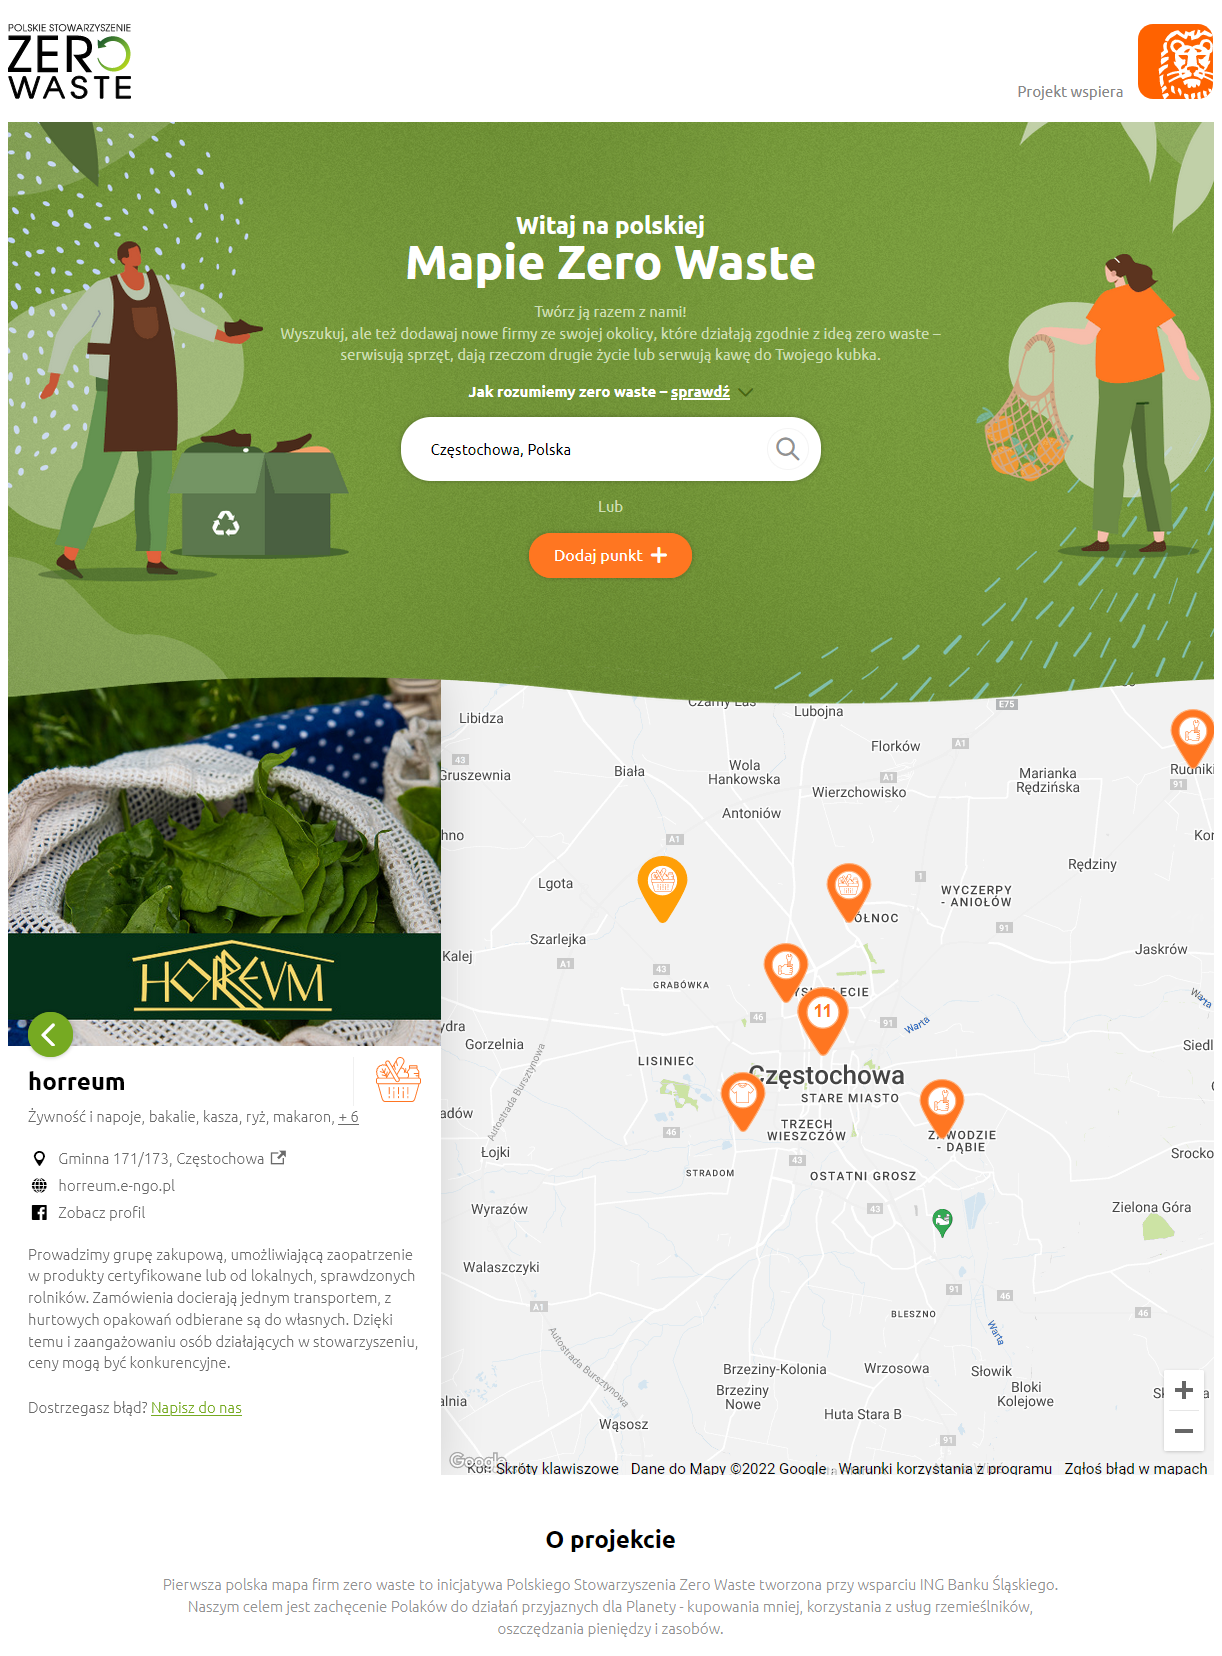 mapa zero waste z punktem horreum